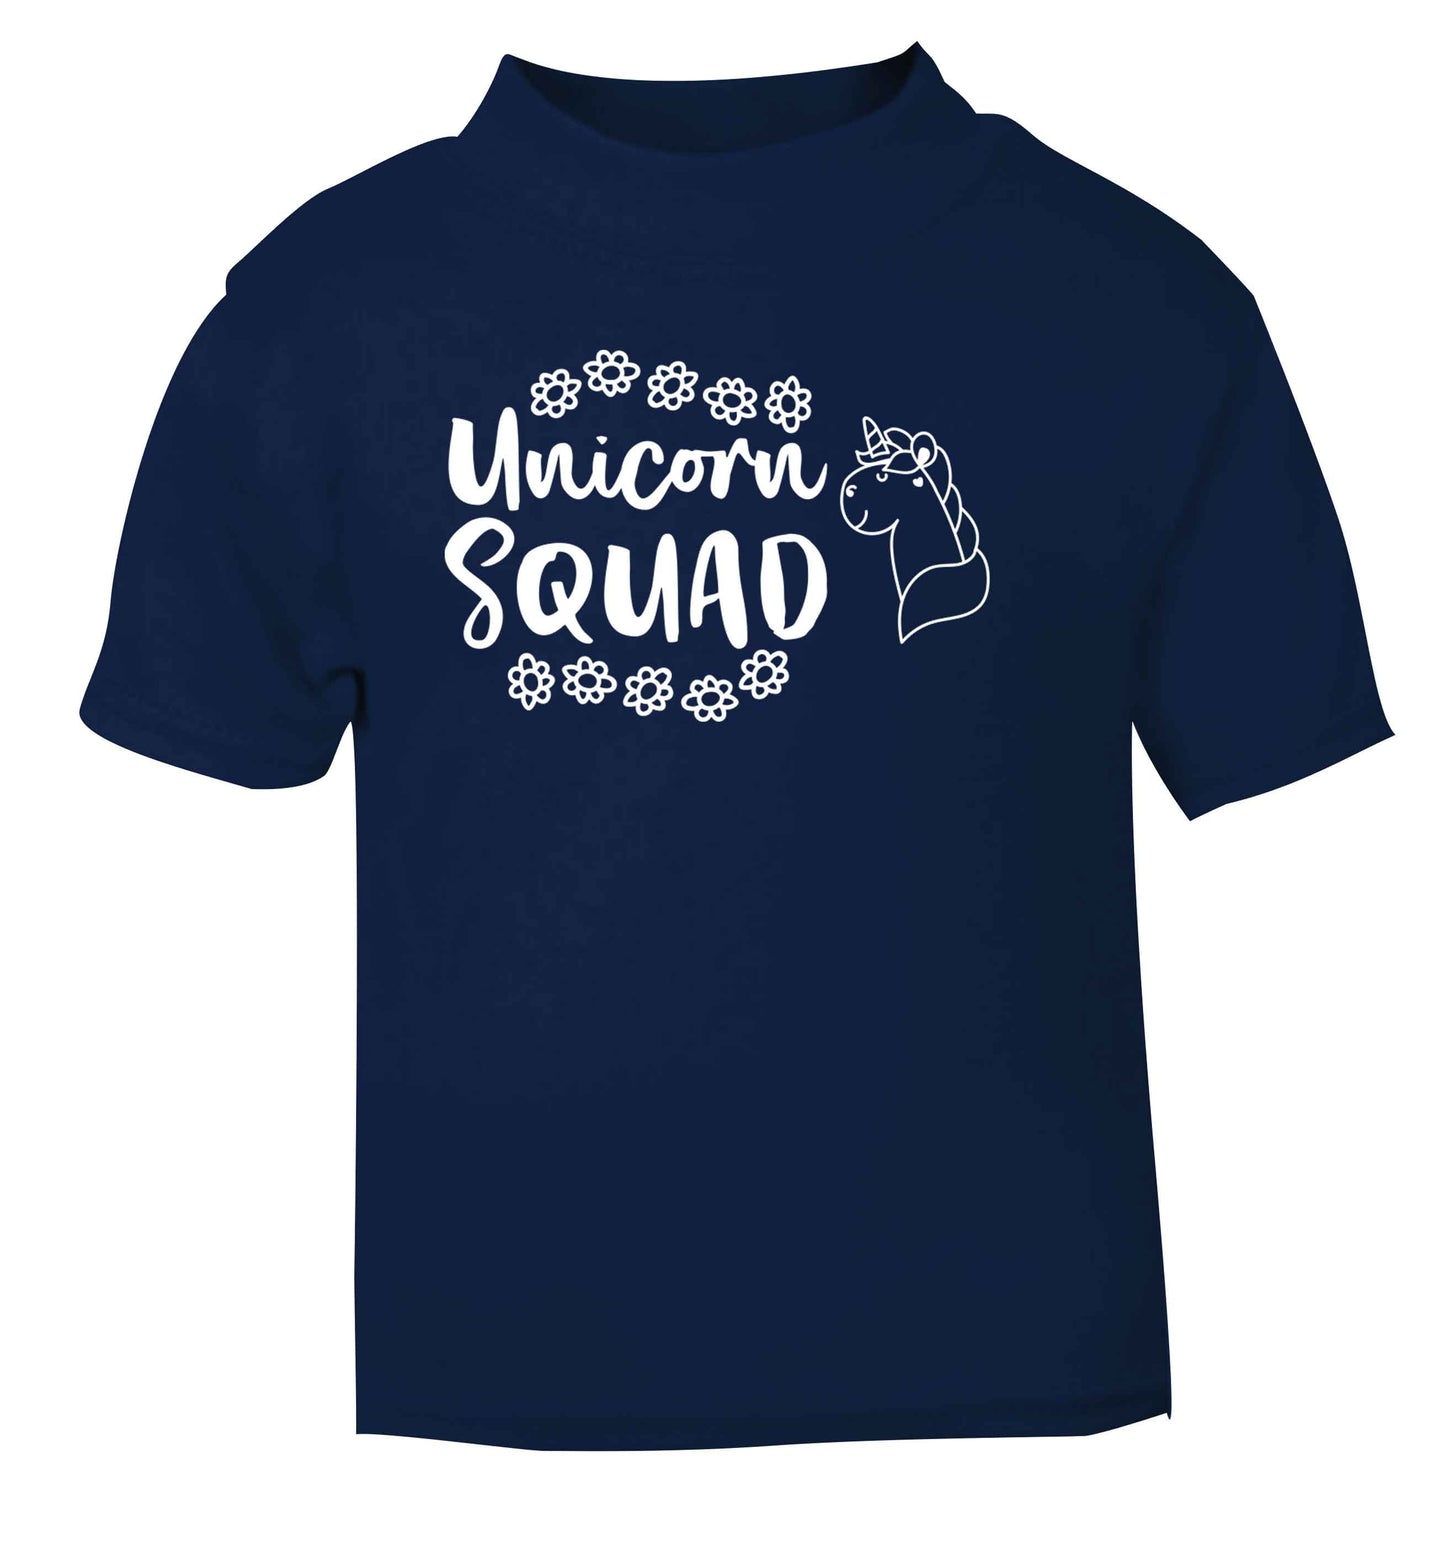 Unicorn Squad navy Baby Toddler Tshirt 2 Years